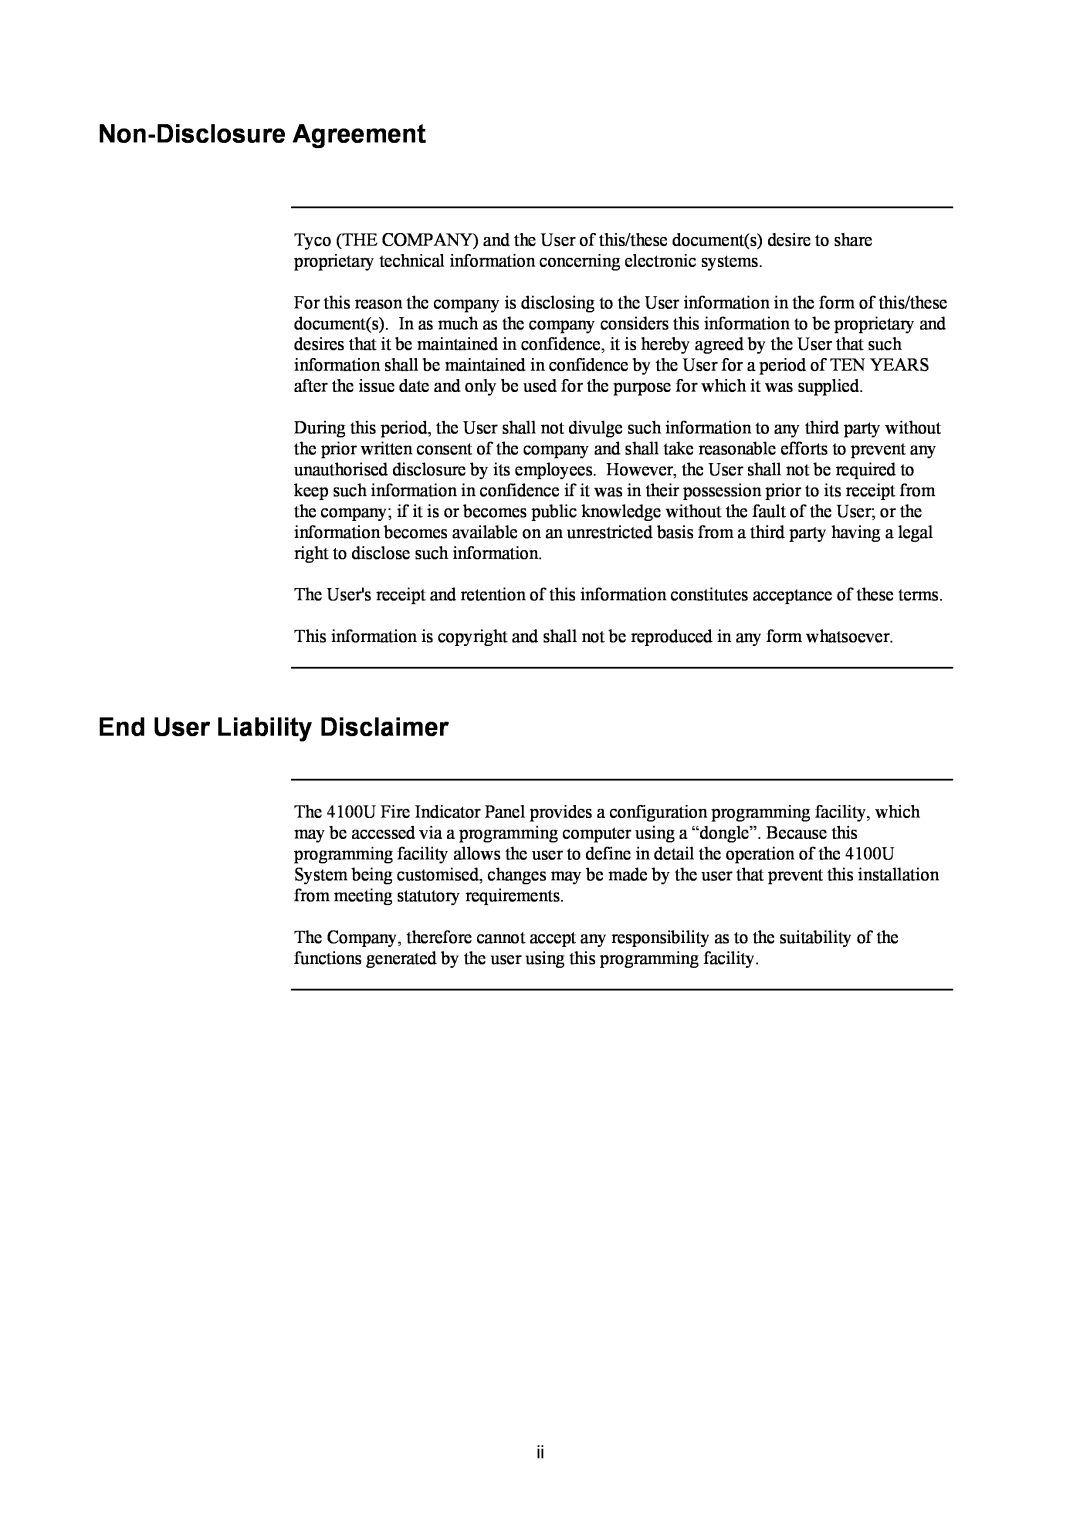 Tyco 4100U installation manual Non-DisclosureAgreement, End User Liability Disclaimer 